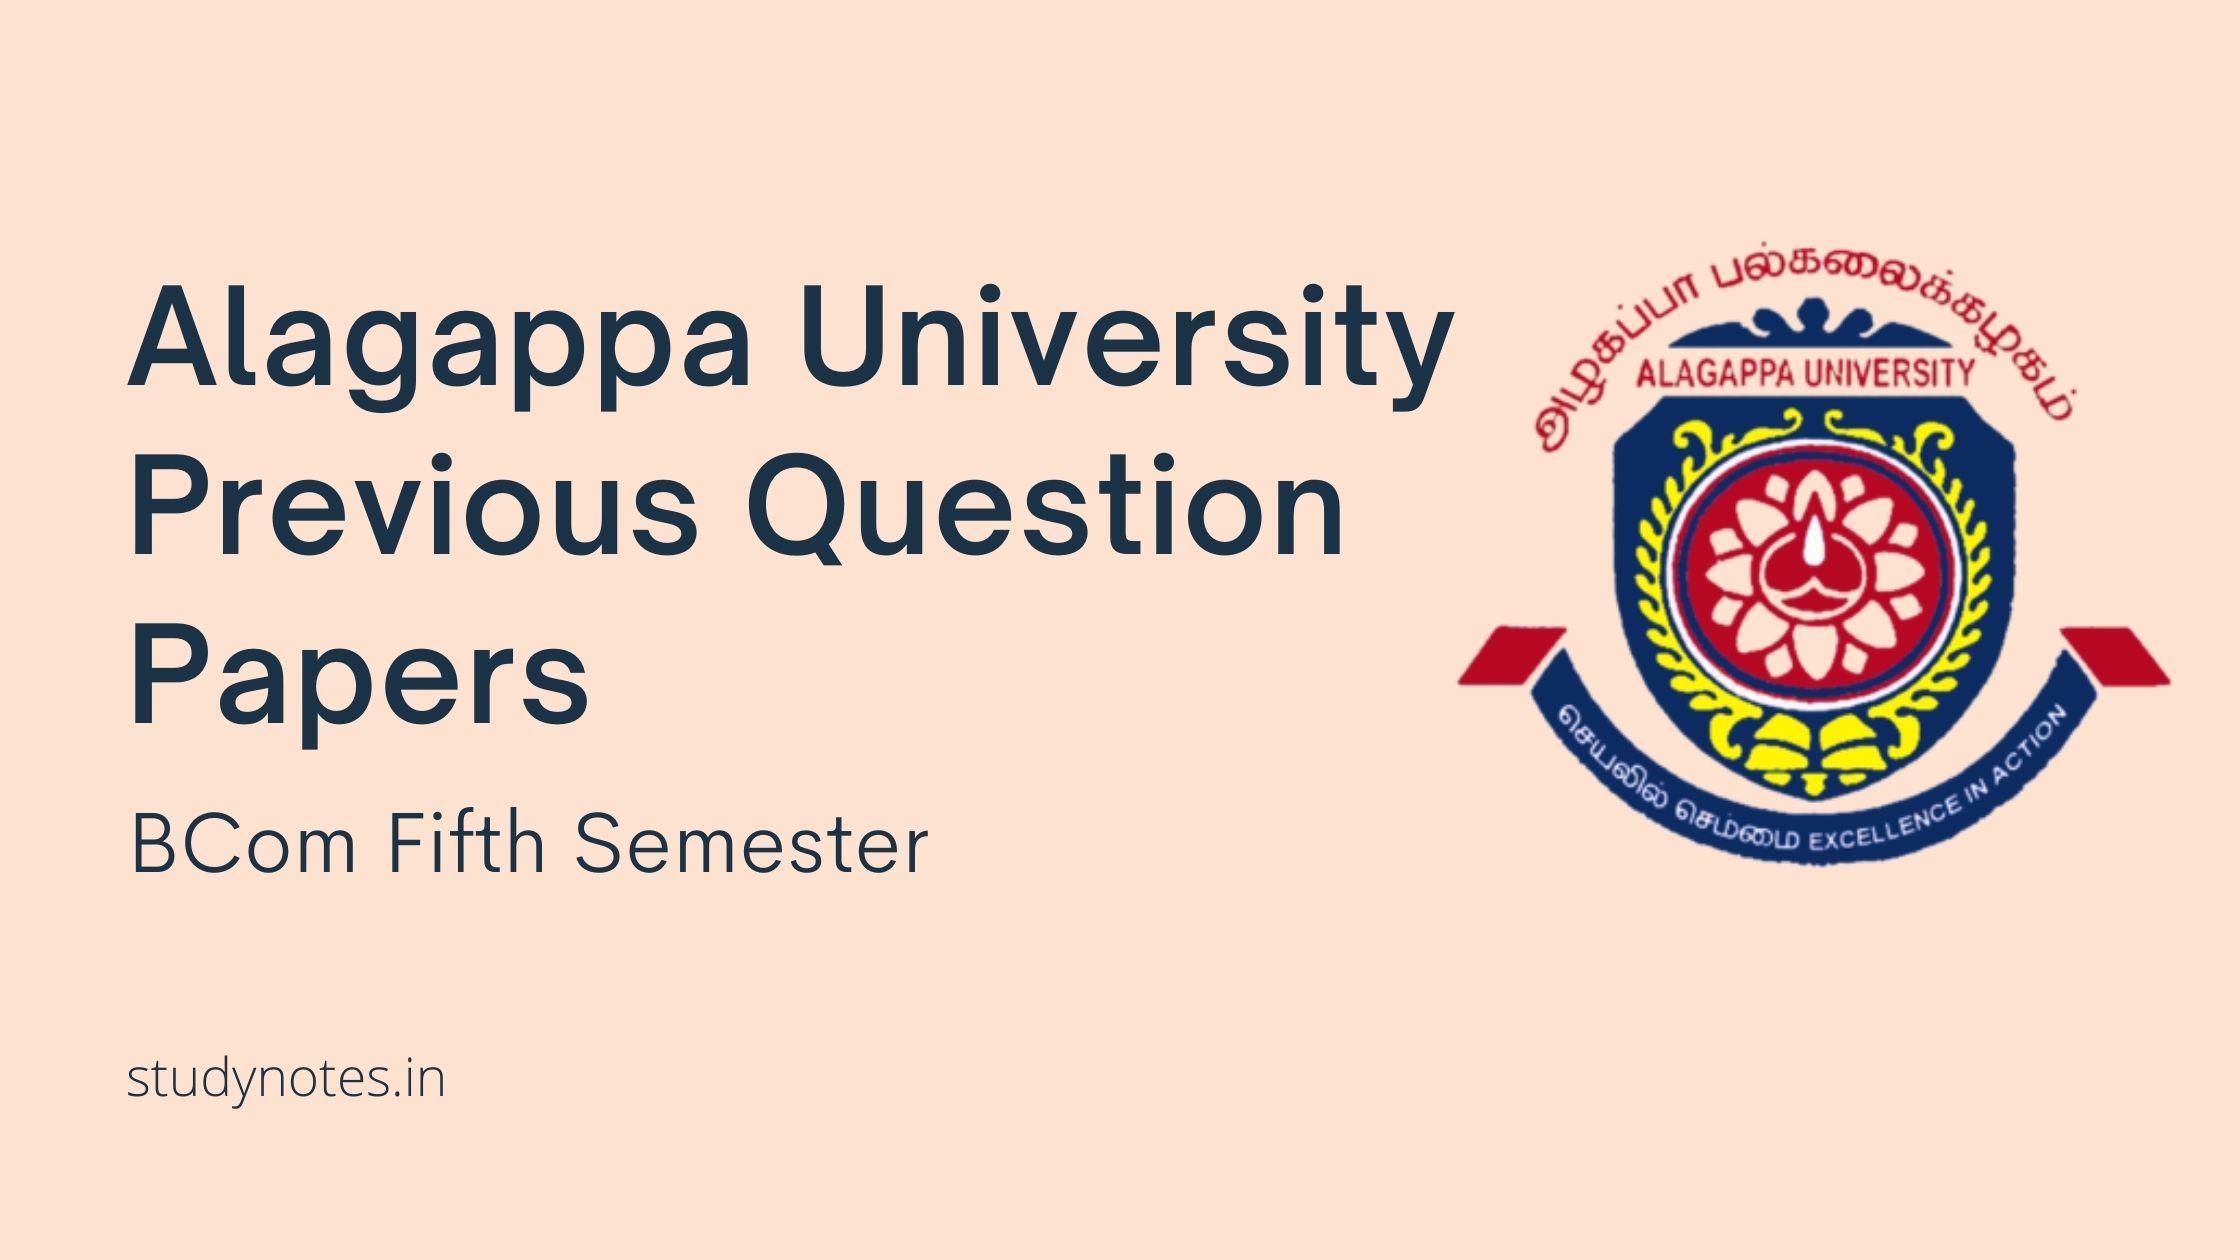 Alagappa University BCom Fifth Semester Previous Question Paper